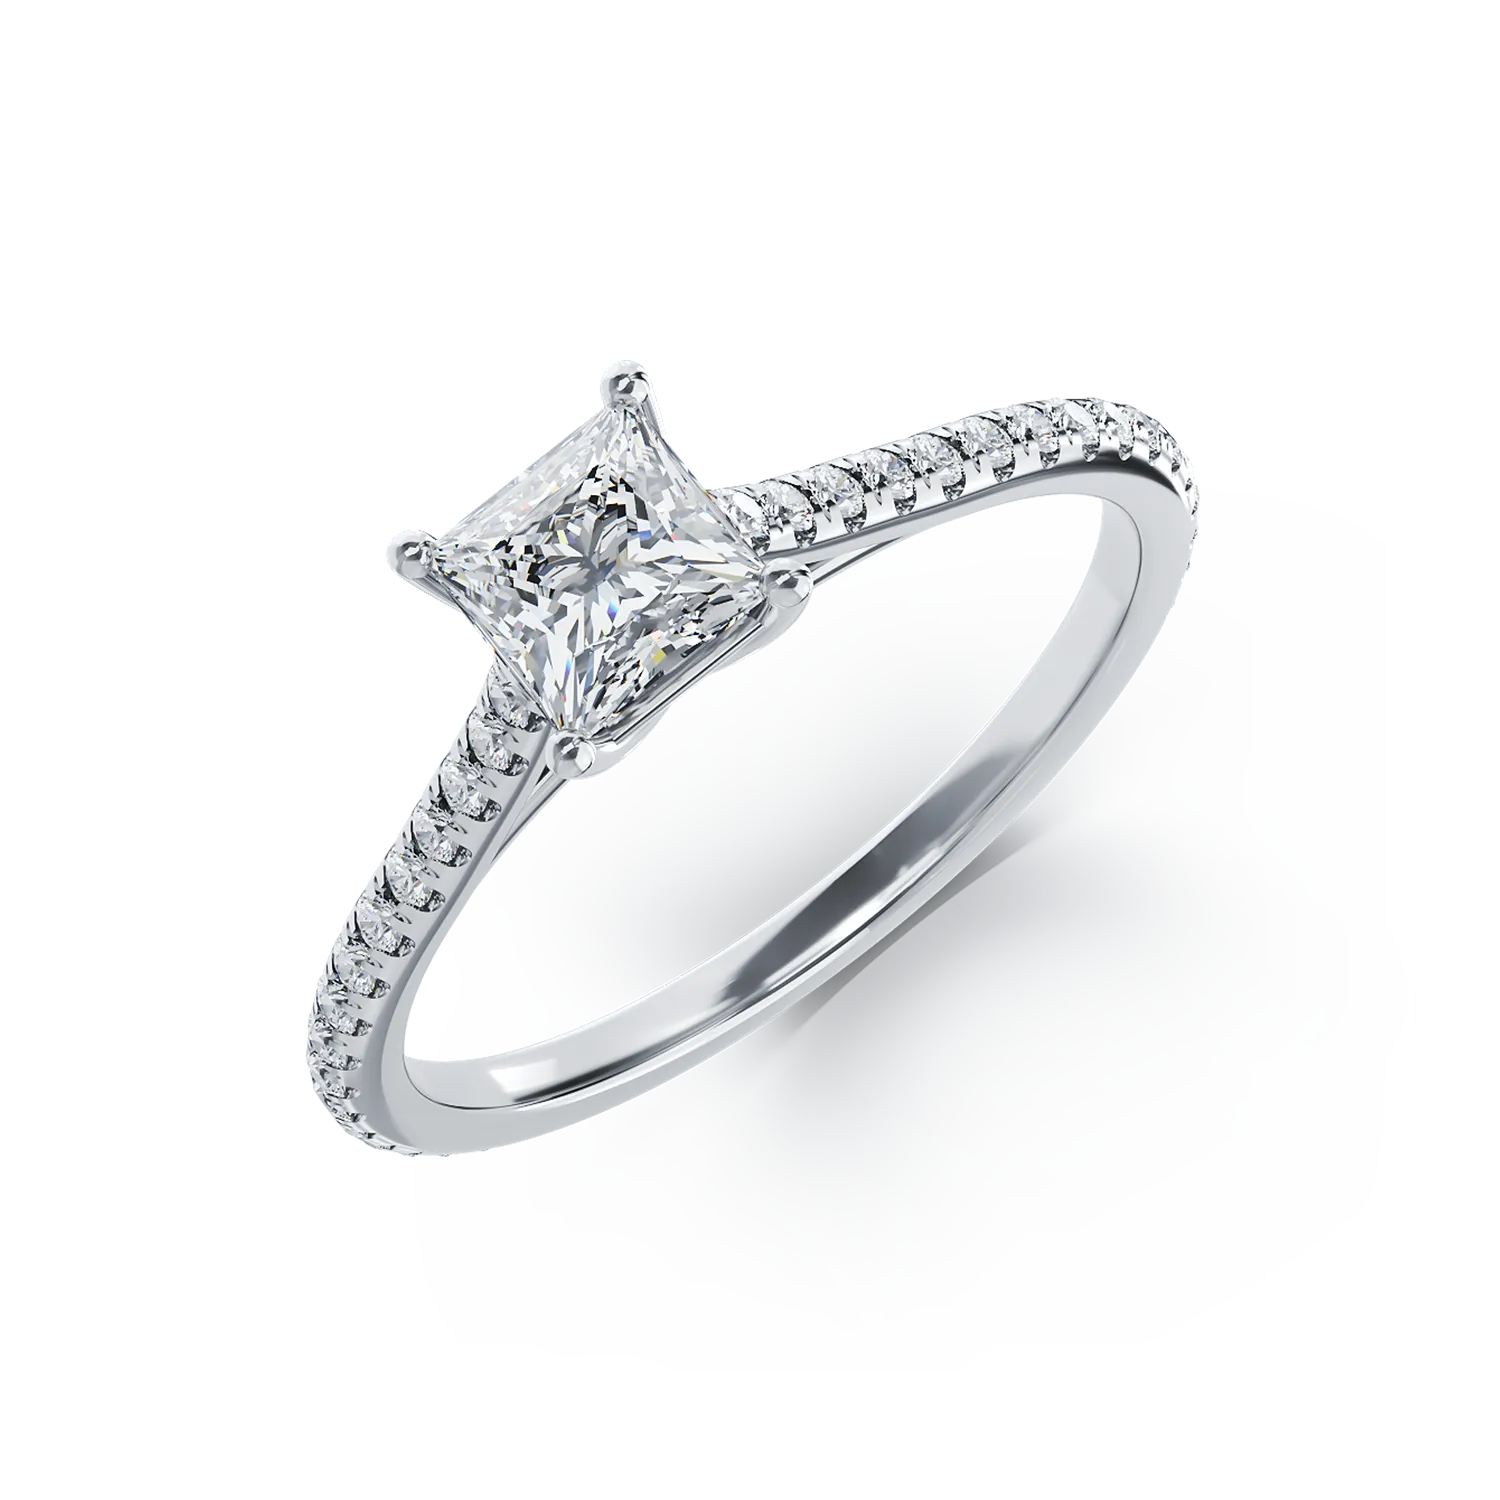 Platinum engagement ring with 0.62ct diamond and 0.18ct diamonds